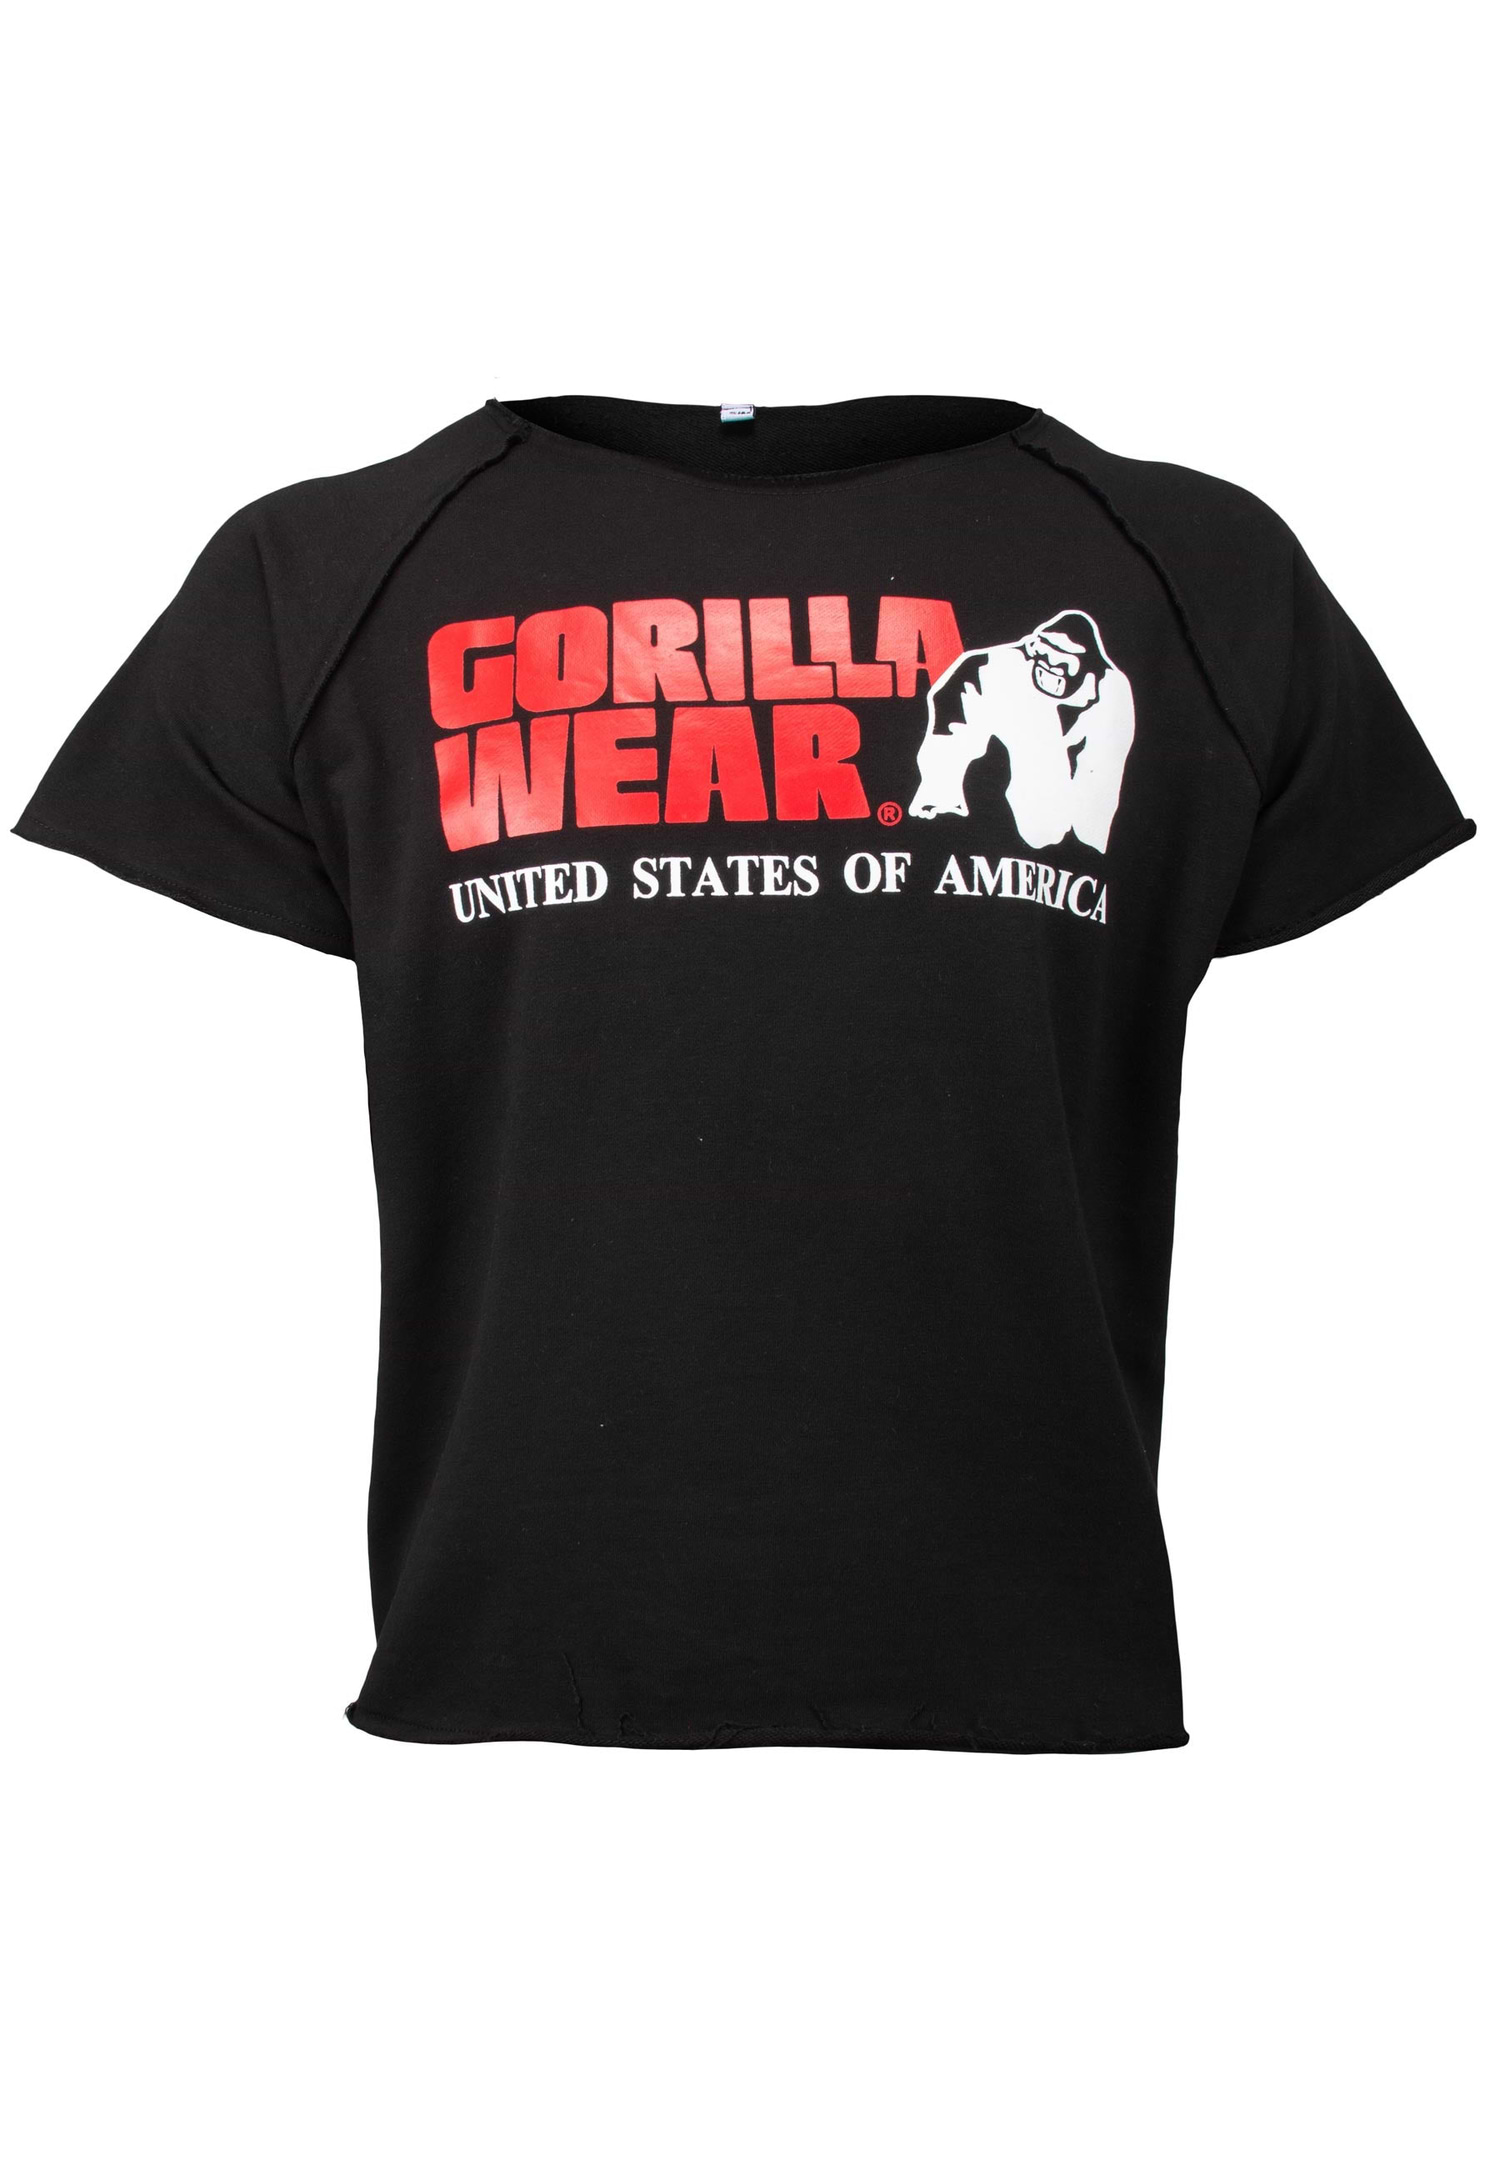 IQ & GORILLA WEAR Gorilla Wear CLASSIC WORK OUT - T-Shirt - Men's - grey -  Private Sport Shop